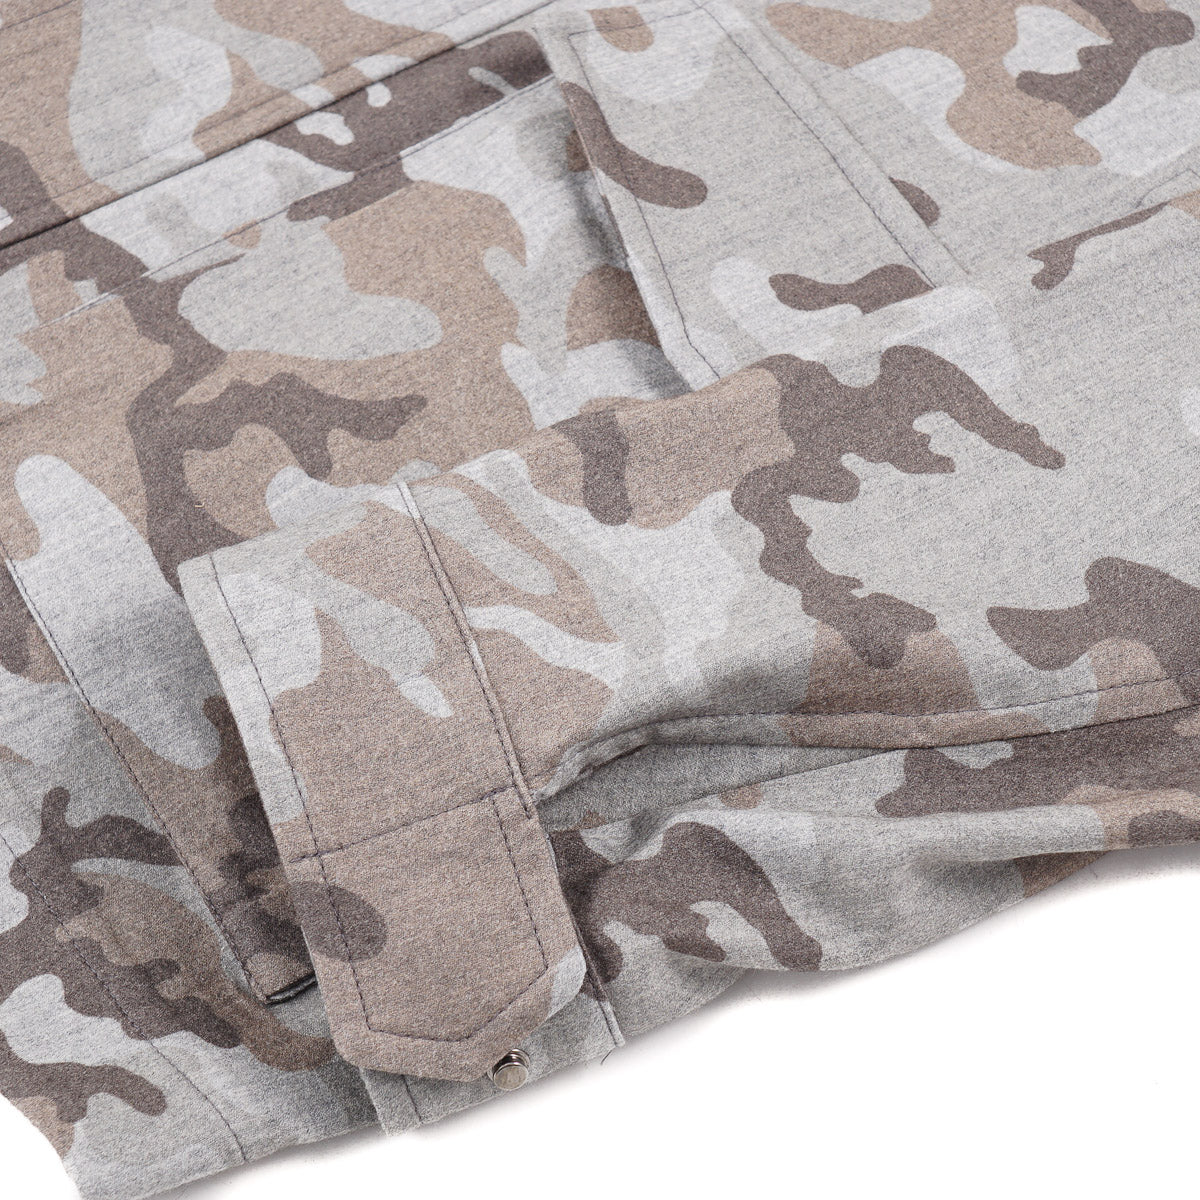 Sartorio Camouflage Wool Field Jacket - Top Shelf Apparel